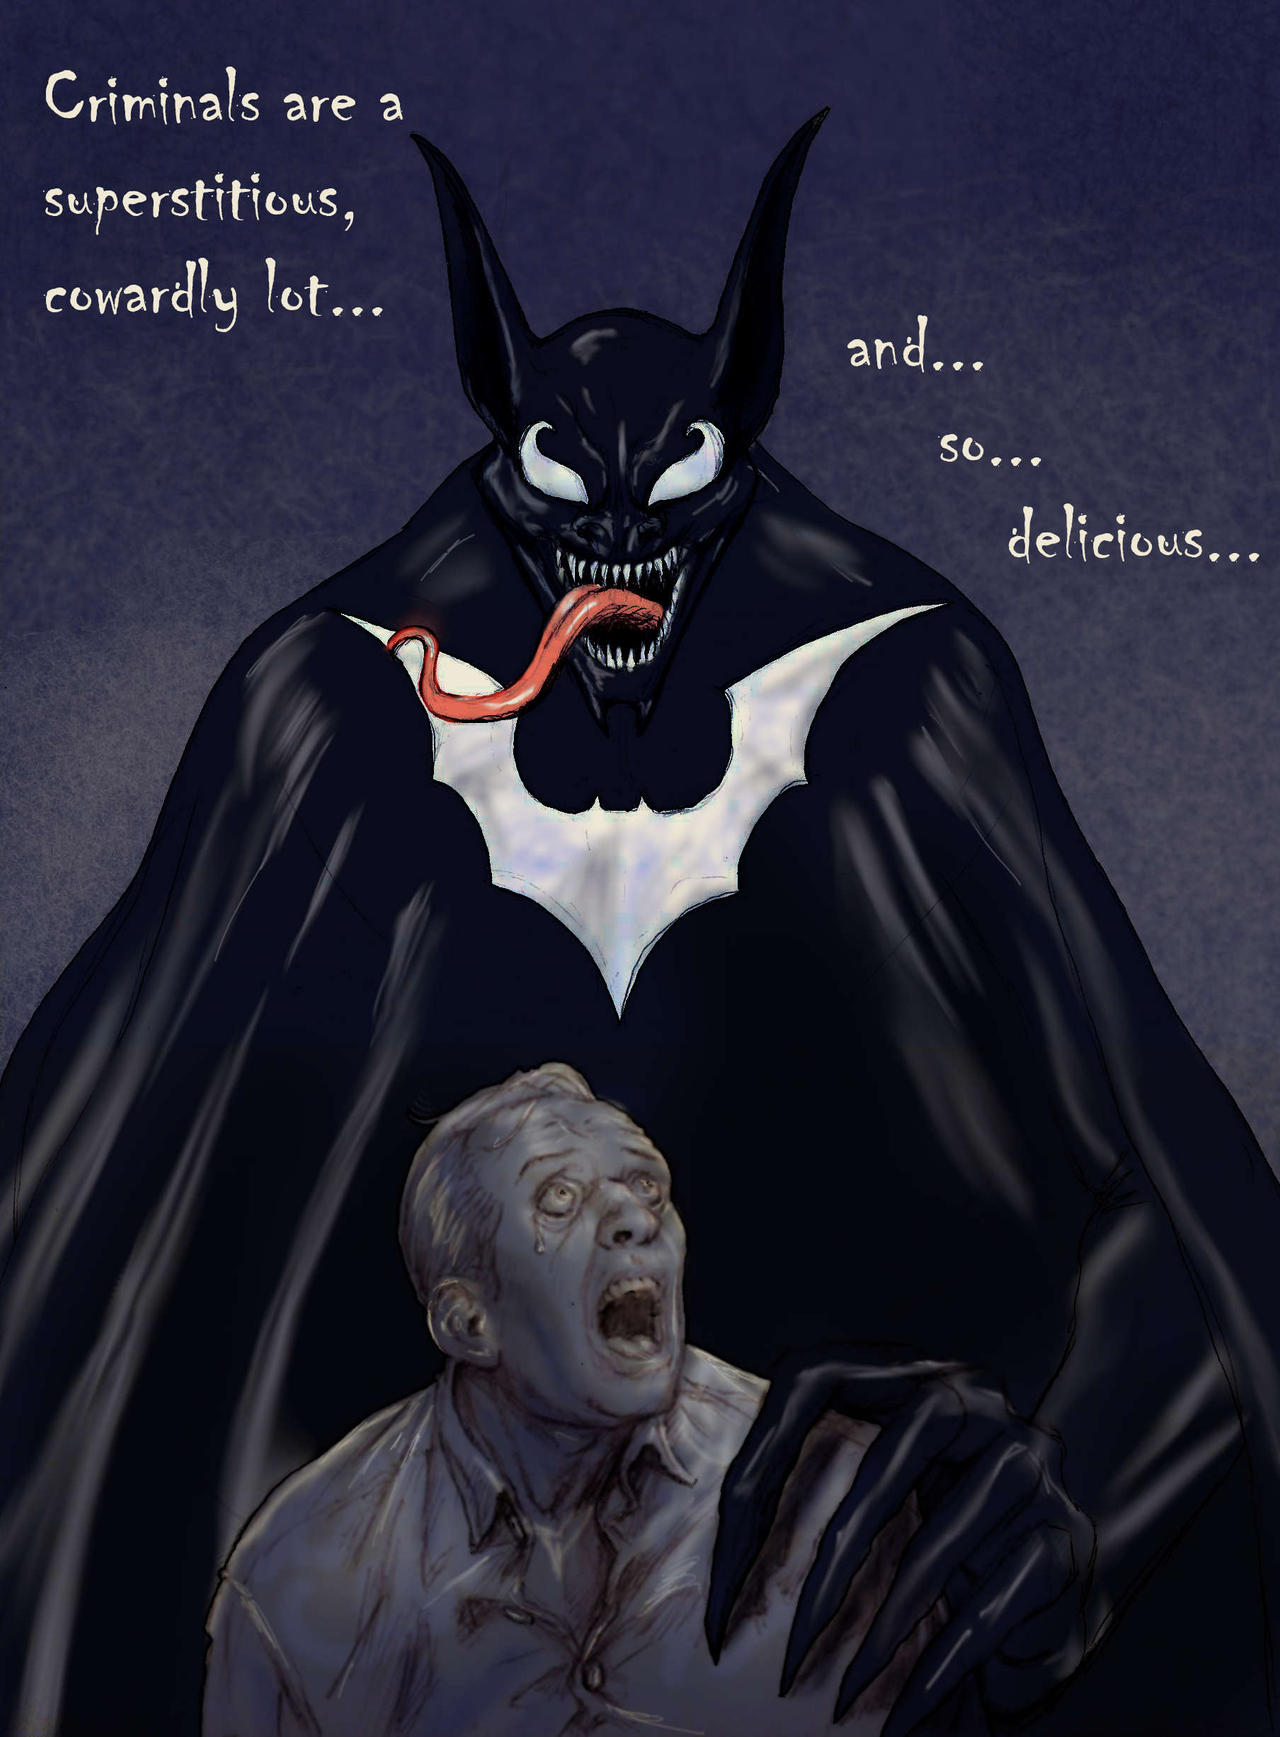 TLIID Symbiote version of... Batman by Nick-Perks on DeviantArt